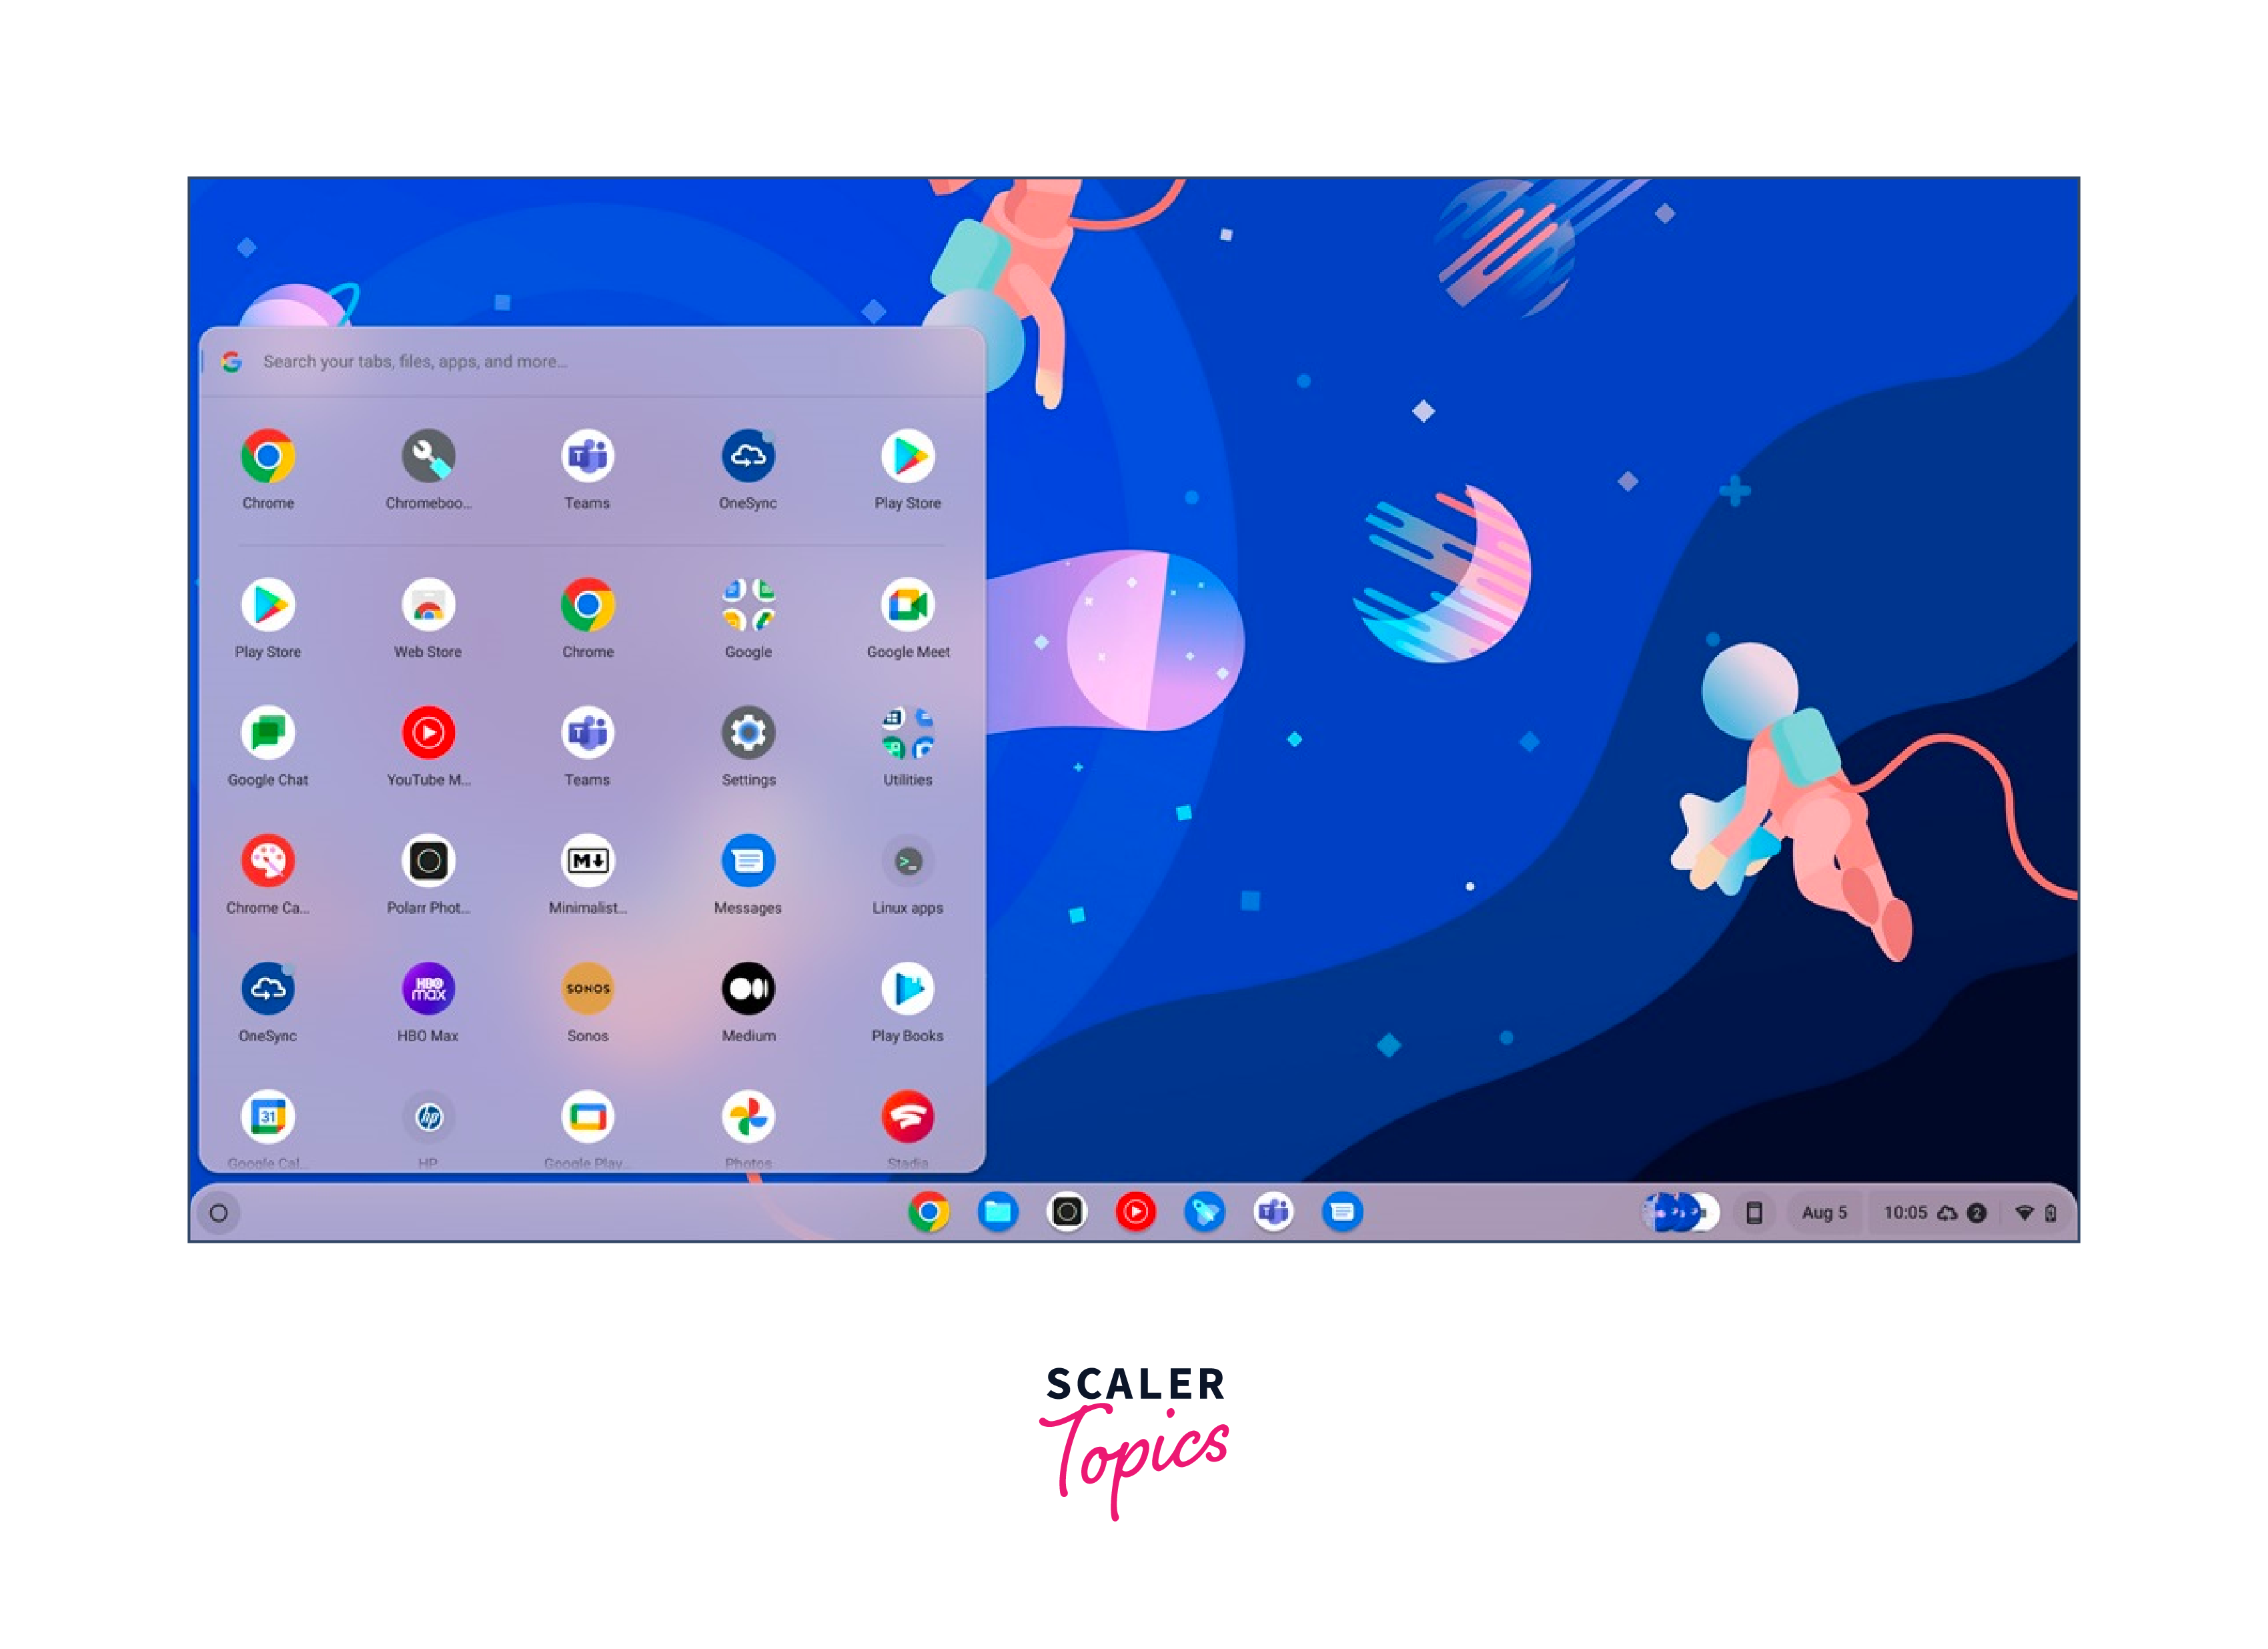 Chrome OS desktop interface